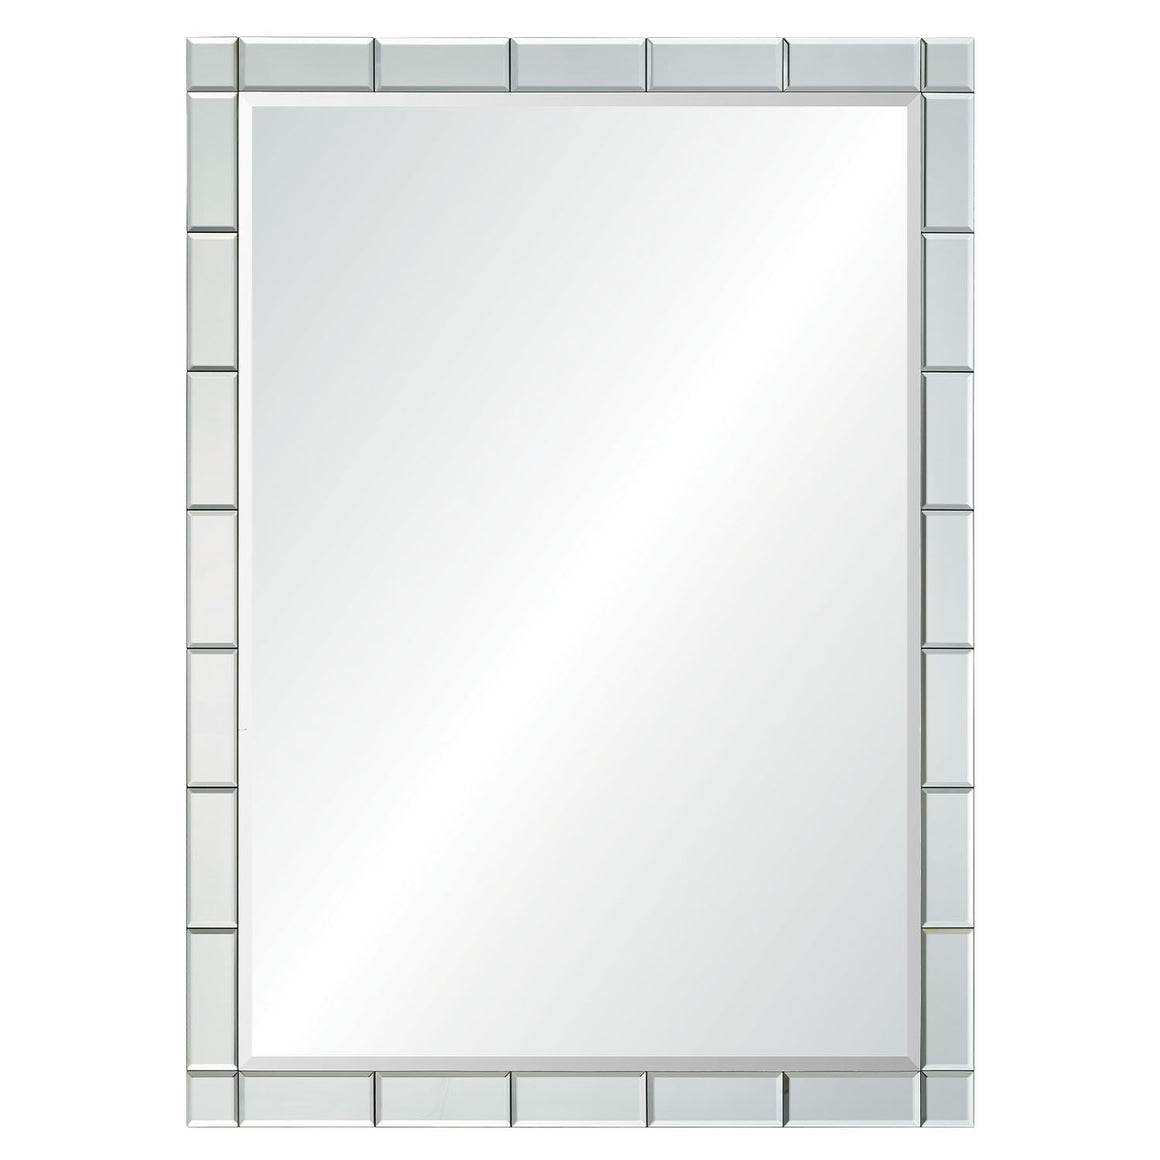 Beveled Tile Framed Mirror - Available in 2 Sizes